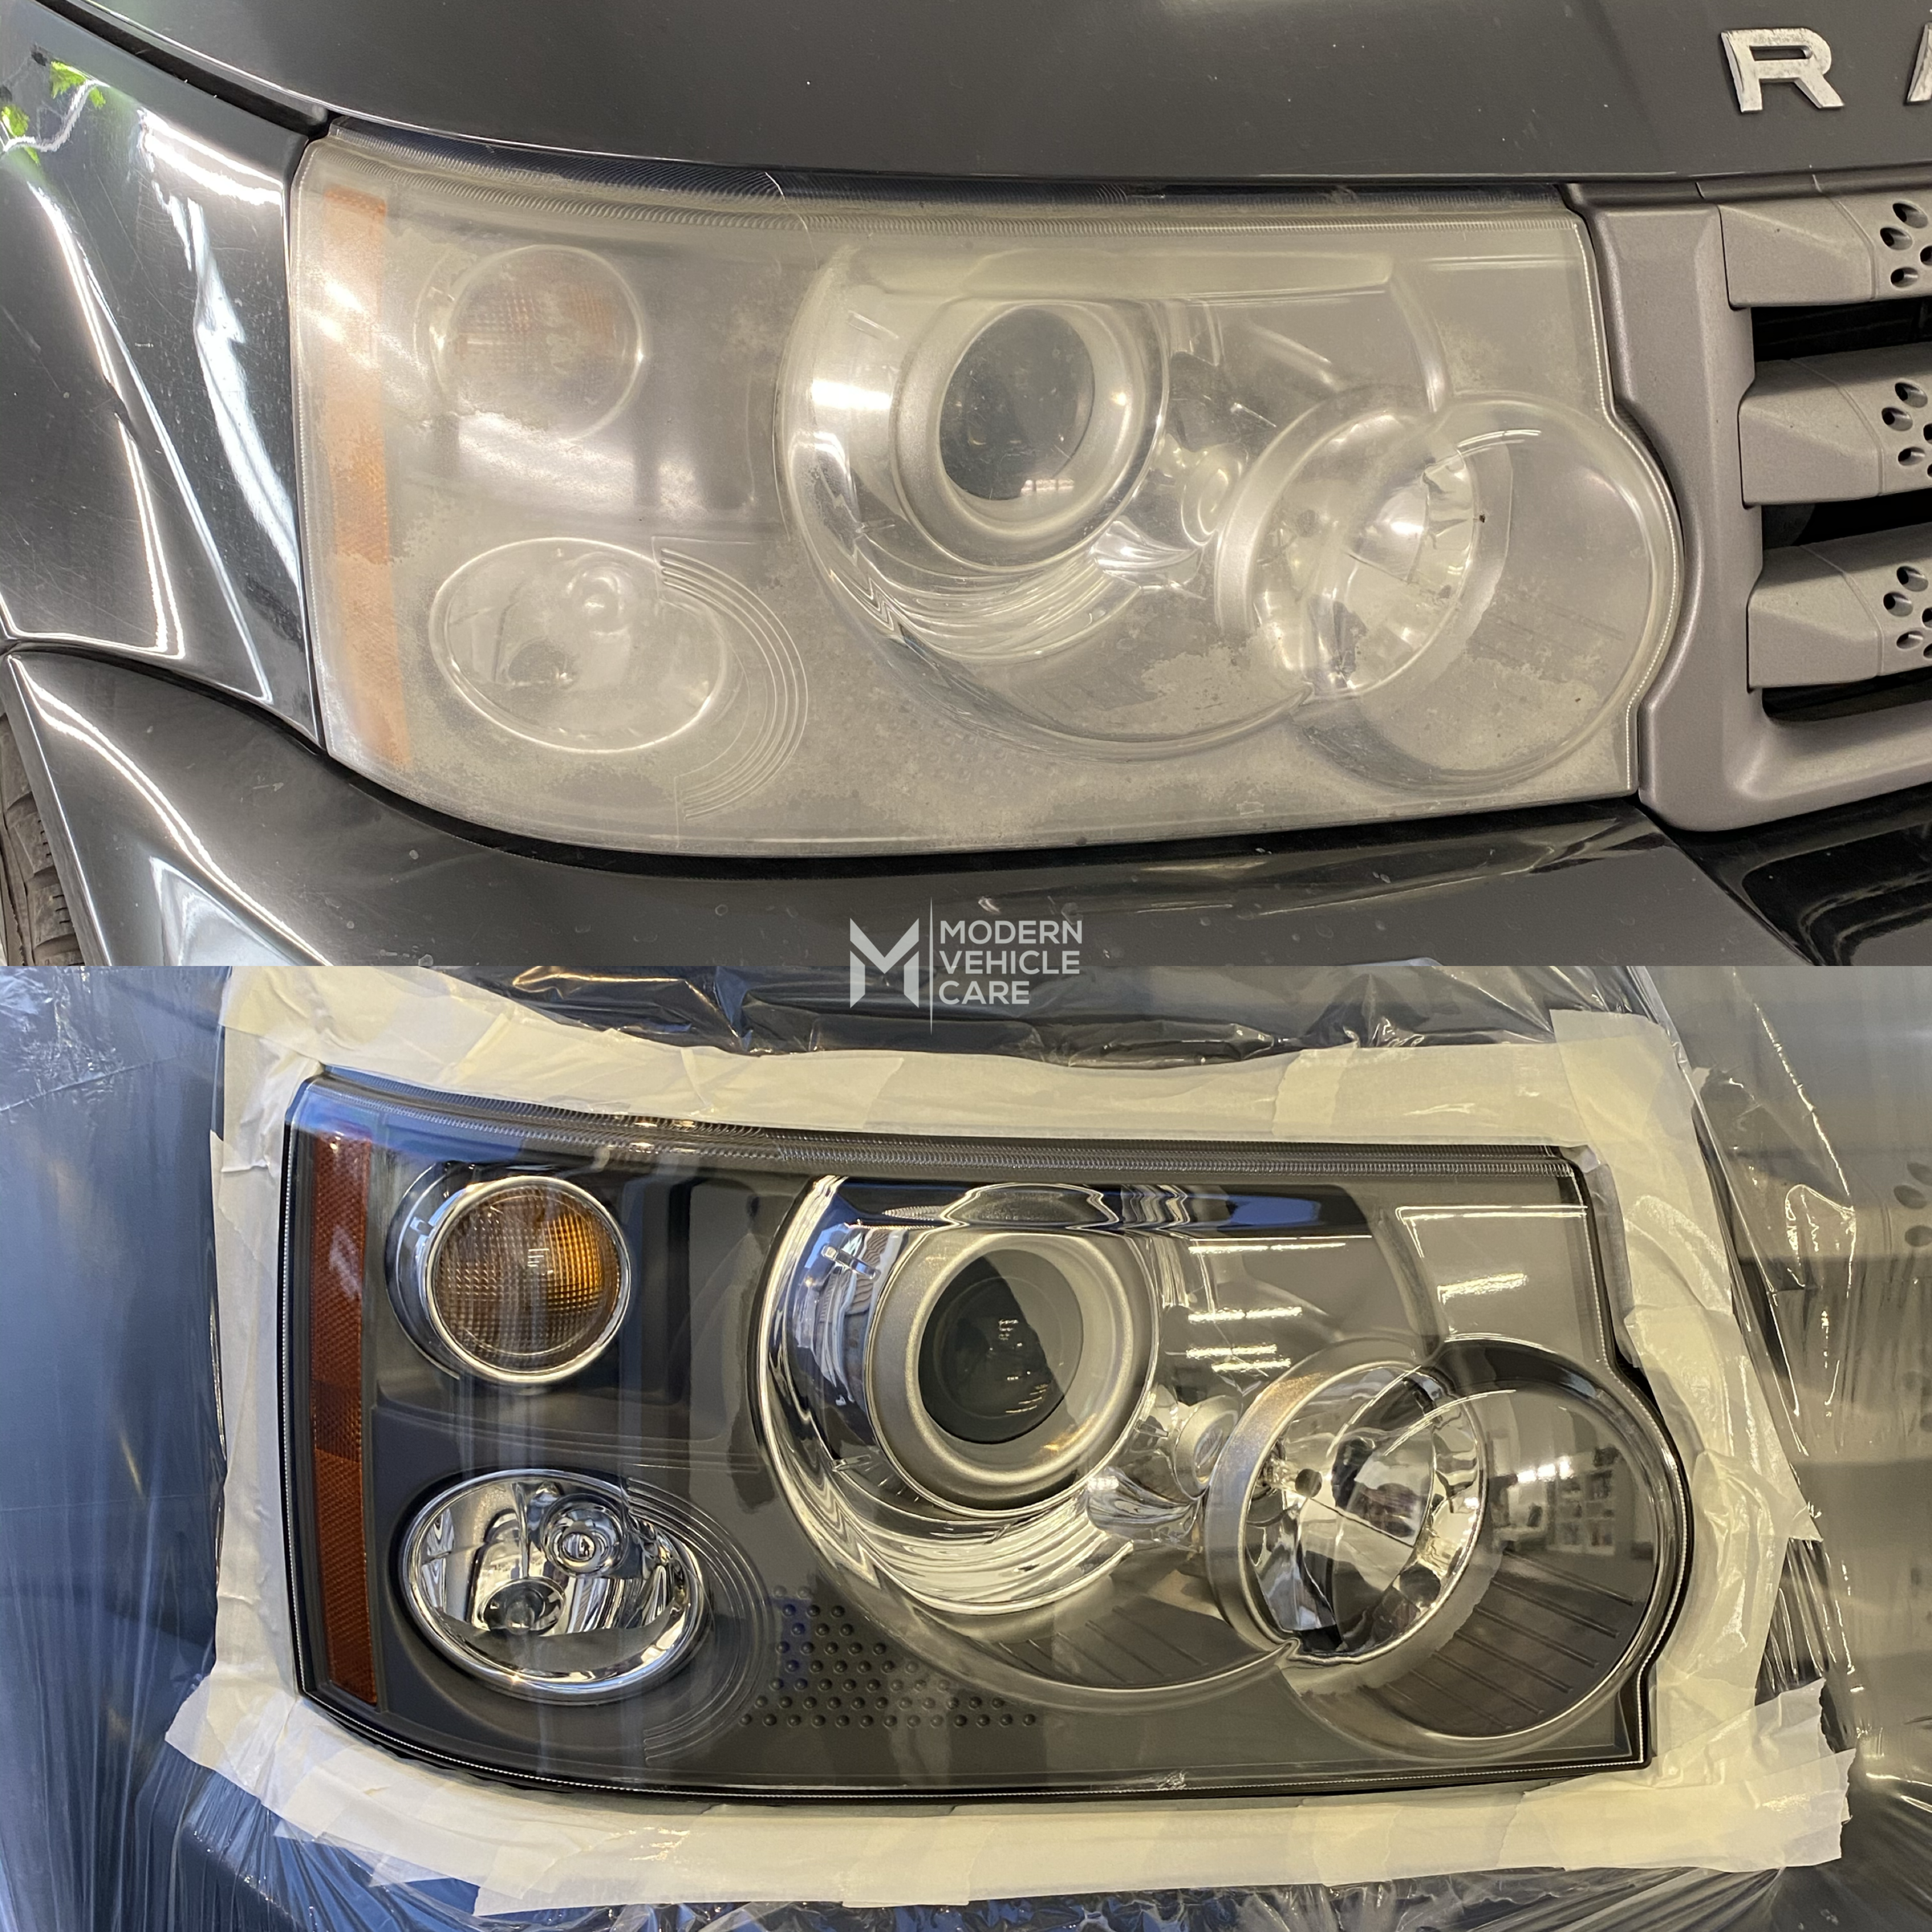 Range Rover Headlights Restored.PNG